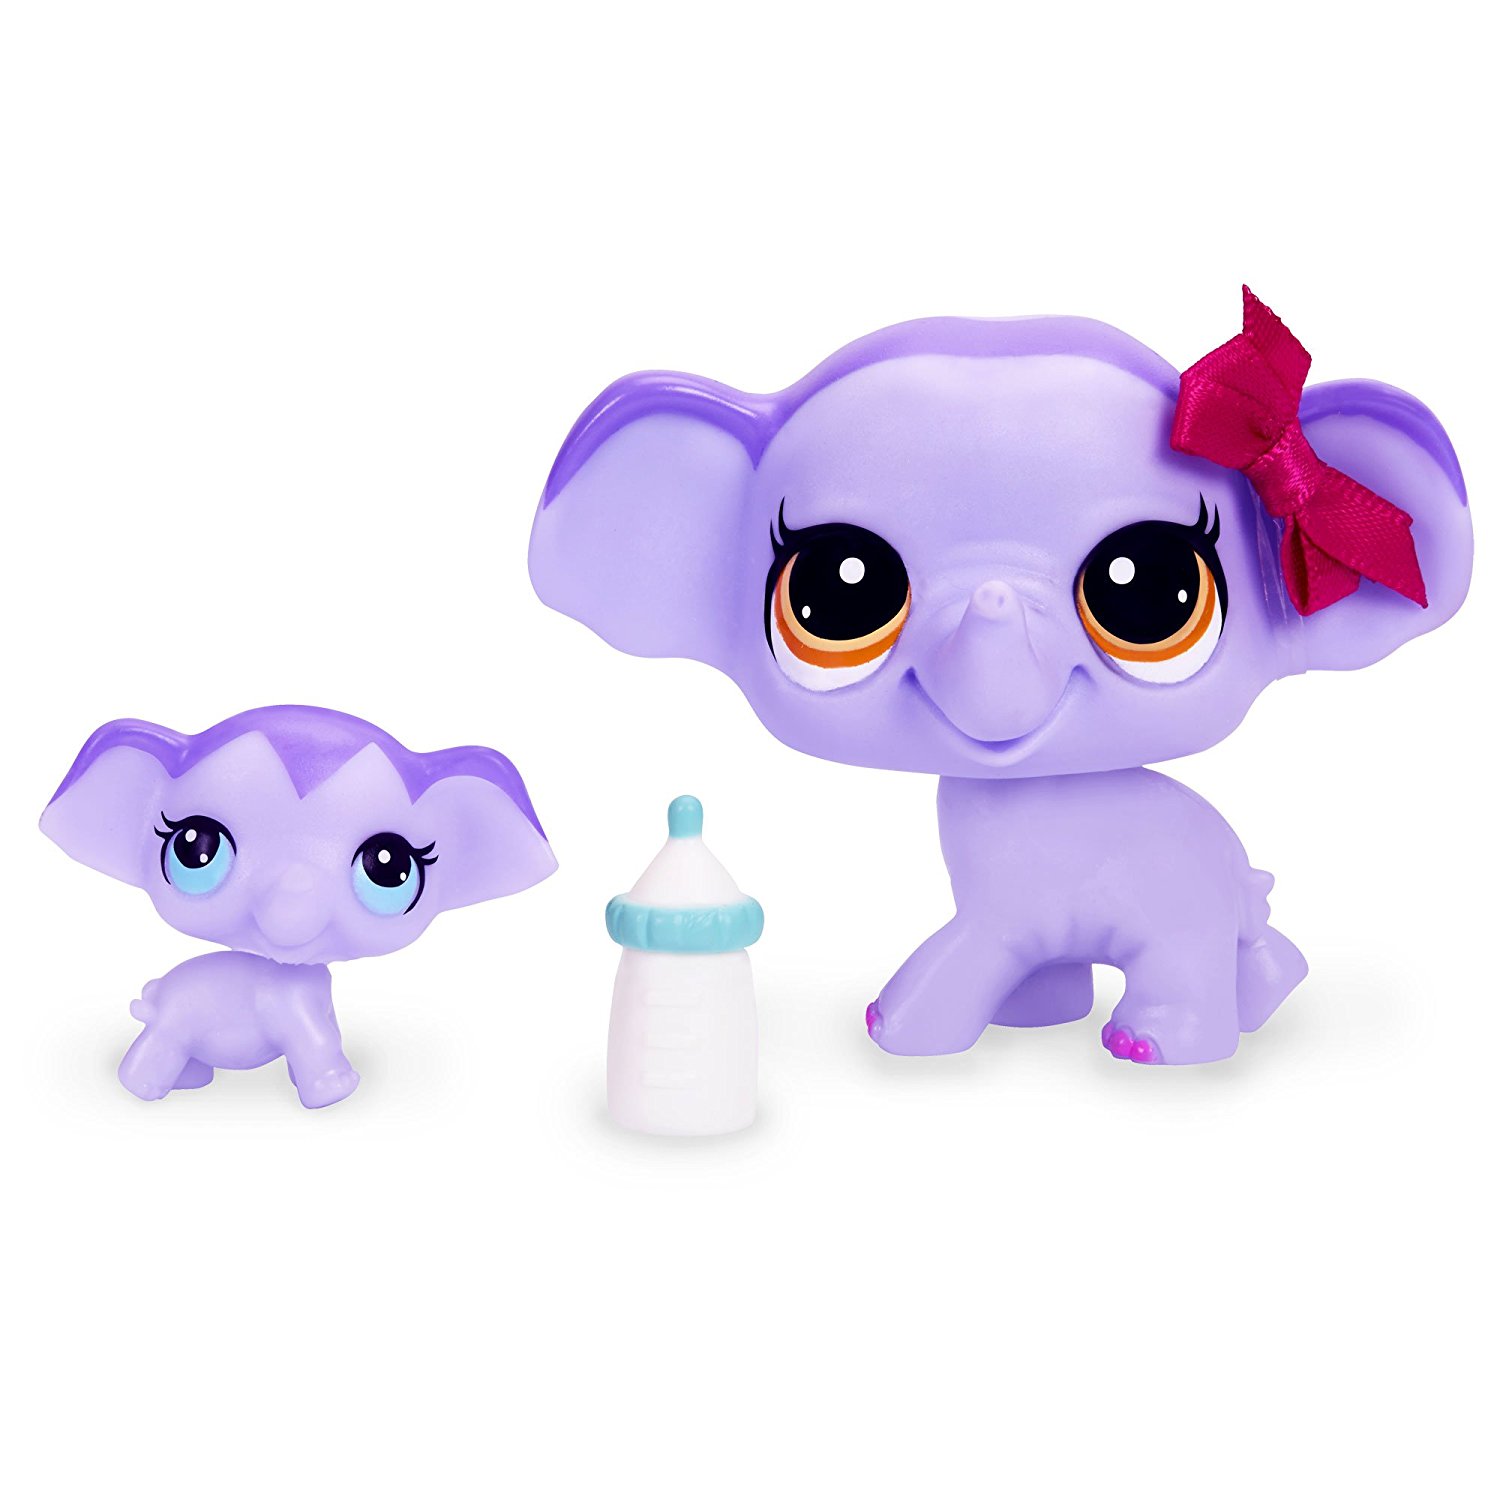 Amazon.com: Littlest Pet Shop Elephant and Baby Elephant Figure Set ...